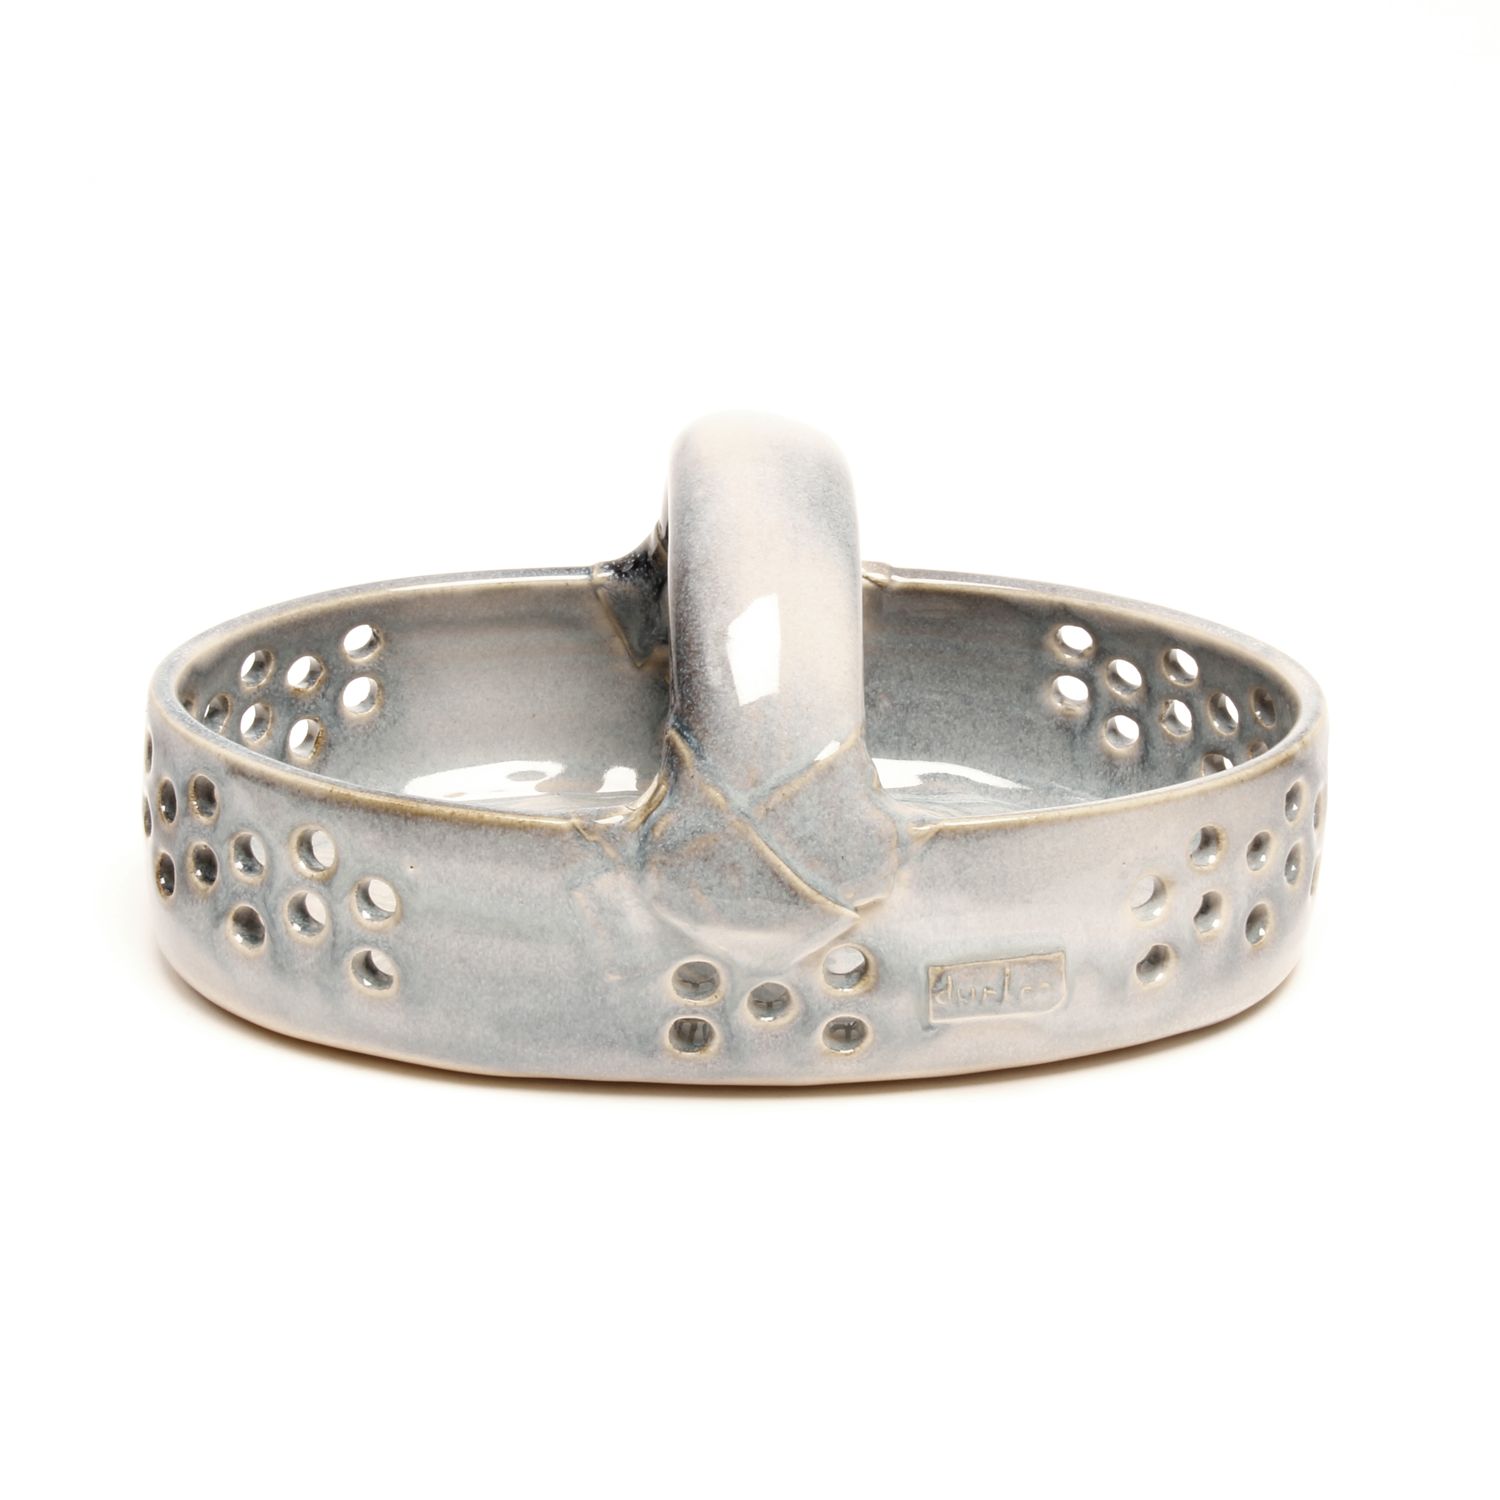 Teresa Dunlop: Pierced Basket Product Image 1 of 2